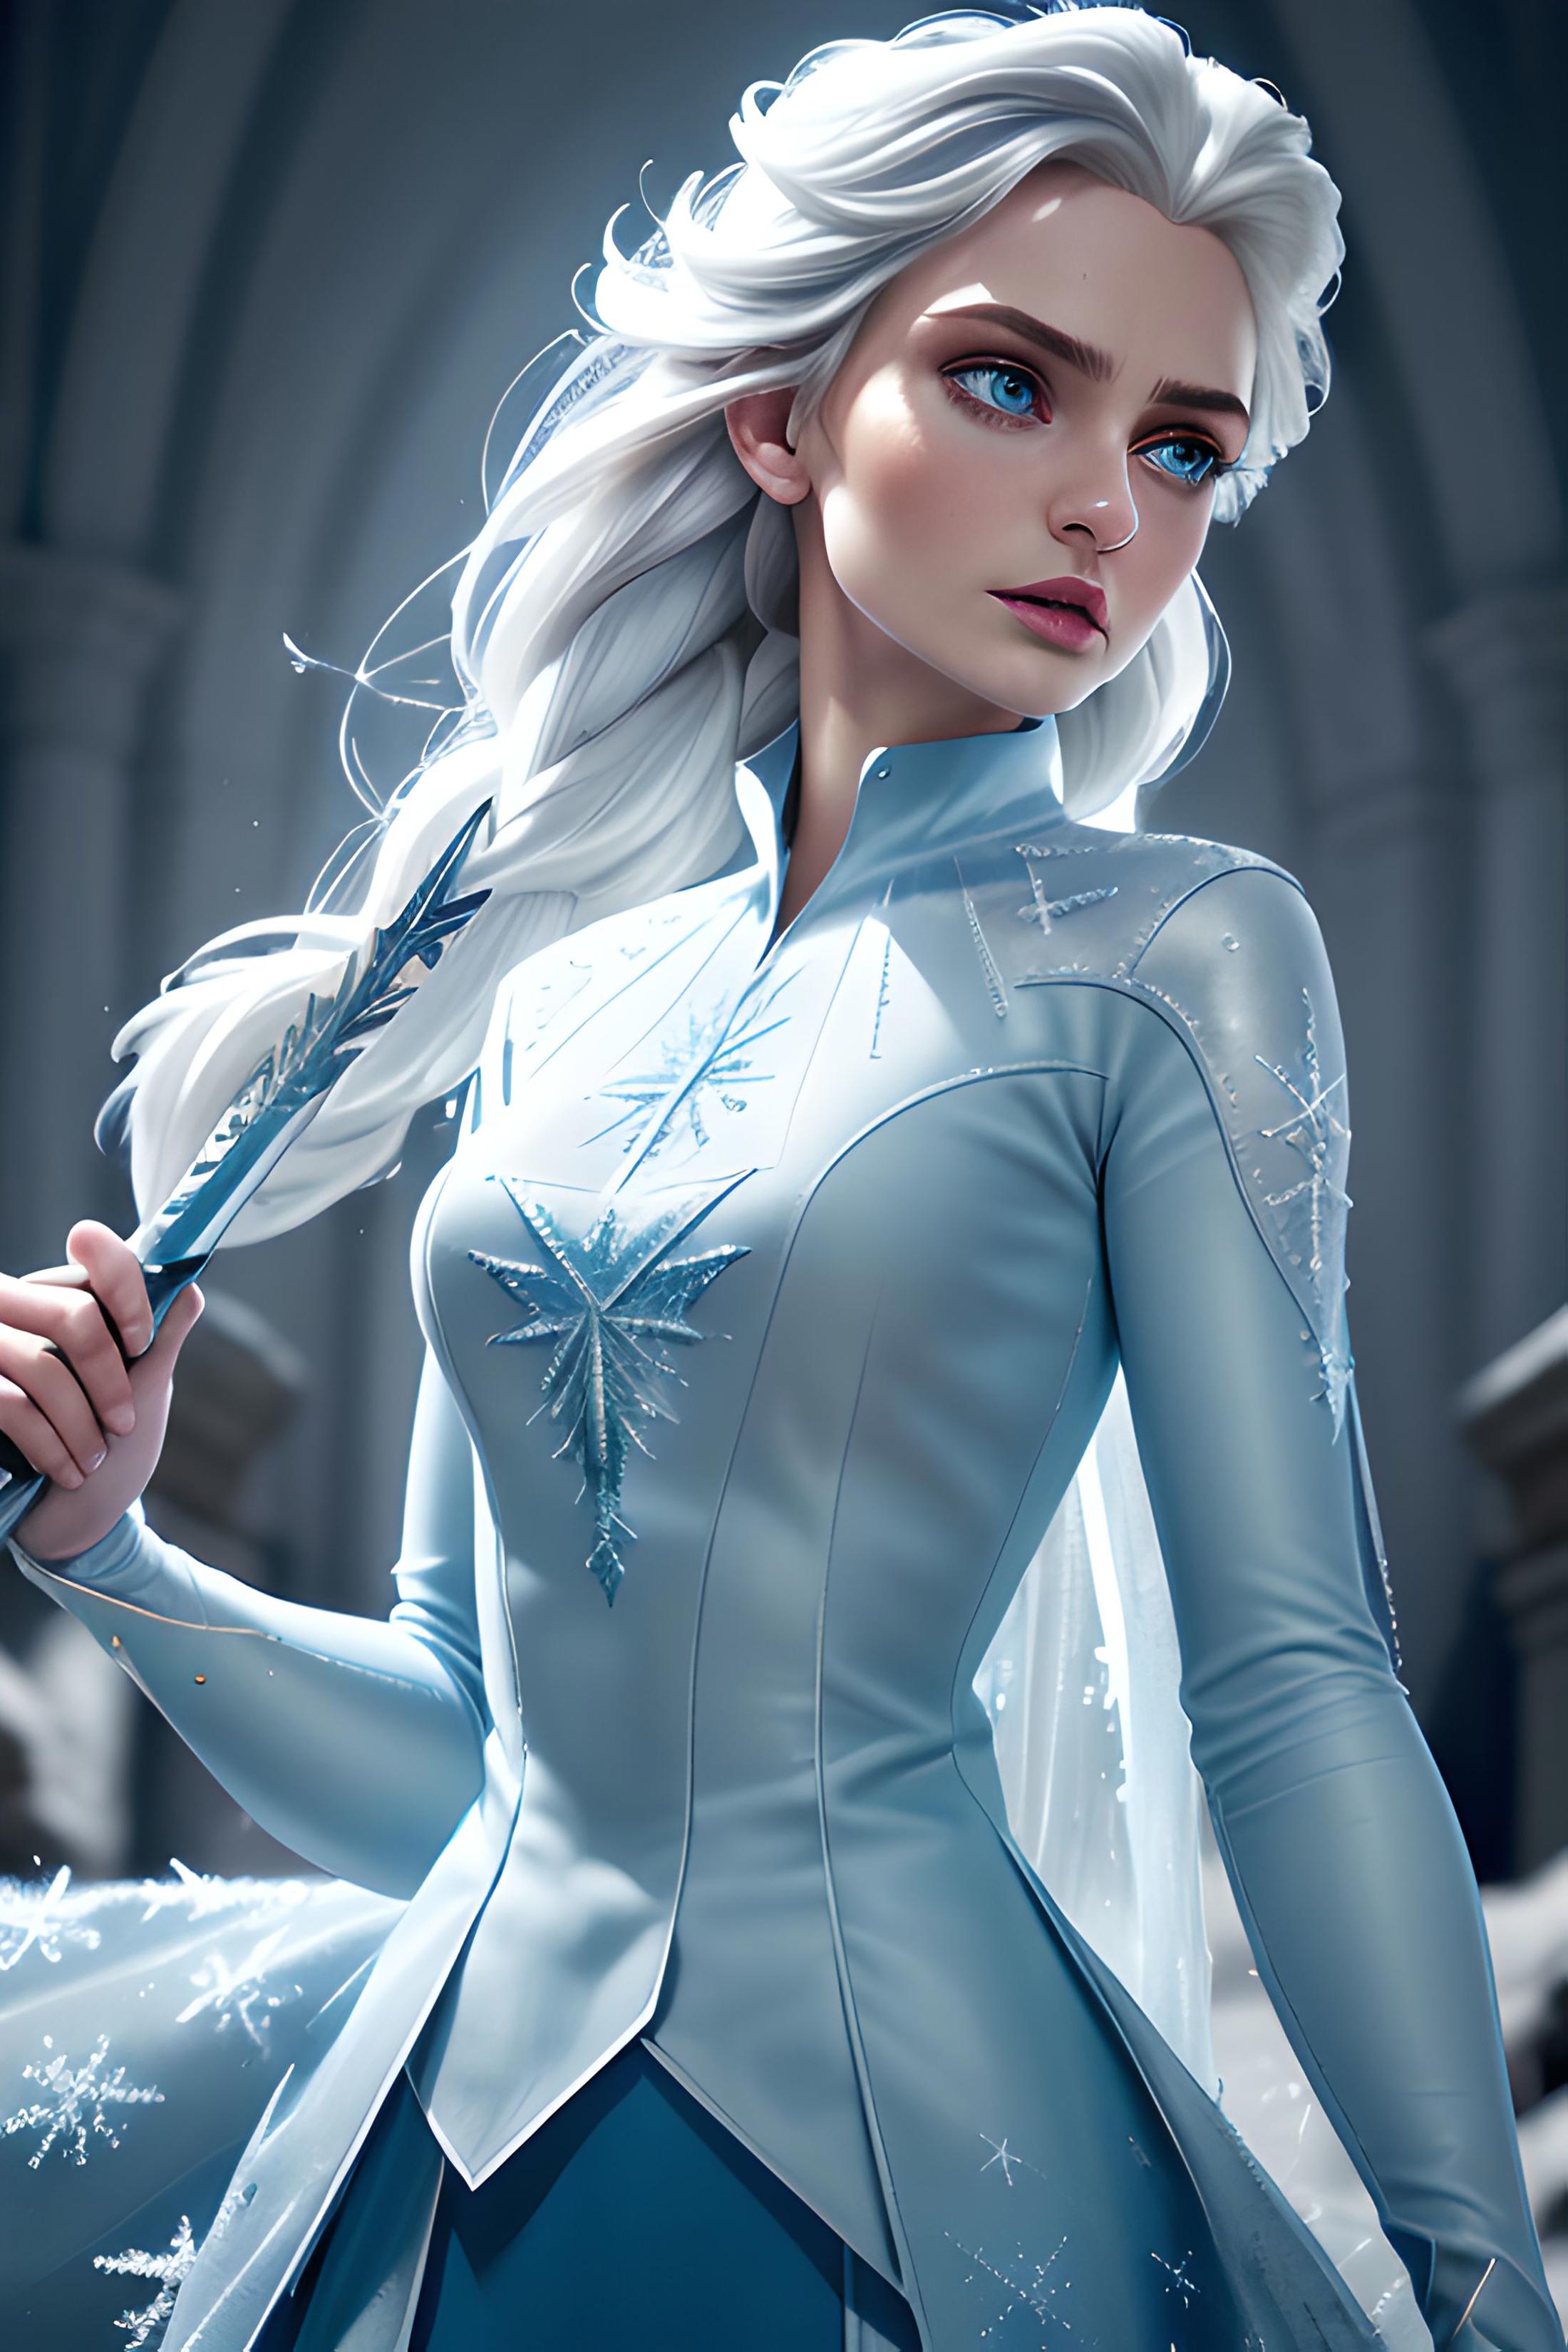 Elsa from Frozen - Disney Princess image by sayurio